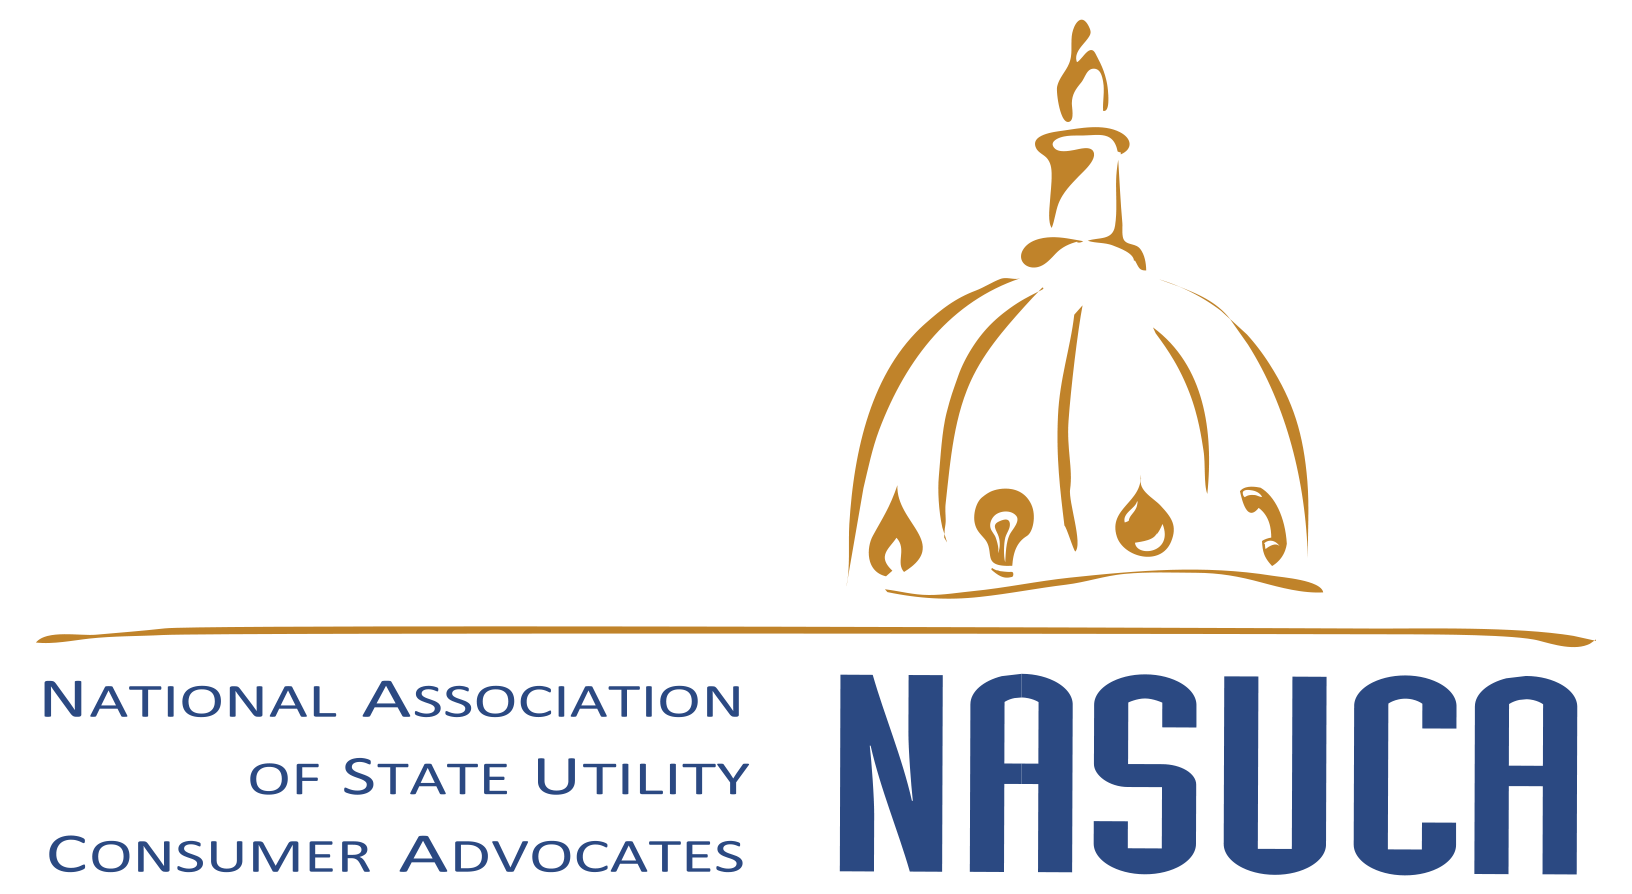 National Association of State Utility Consumer Advocates logo